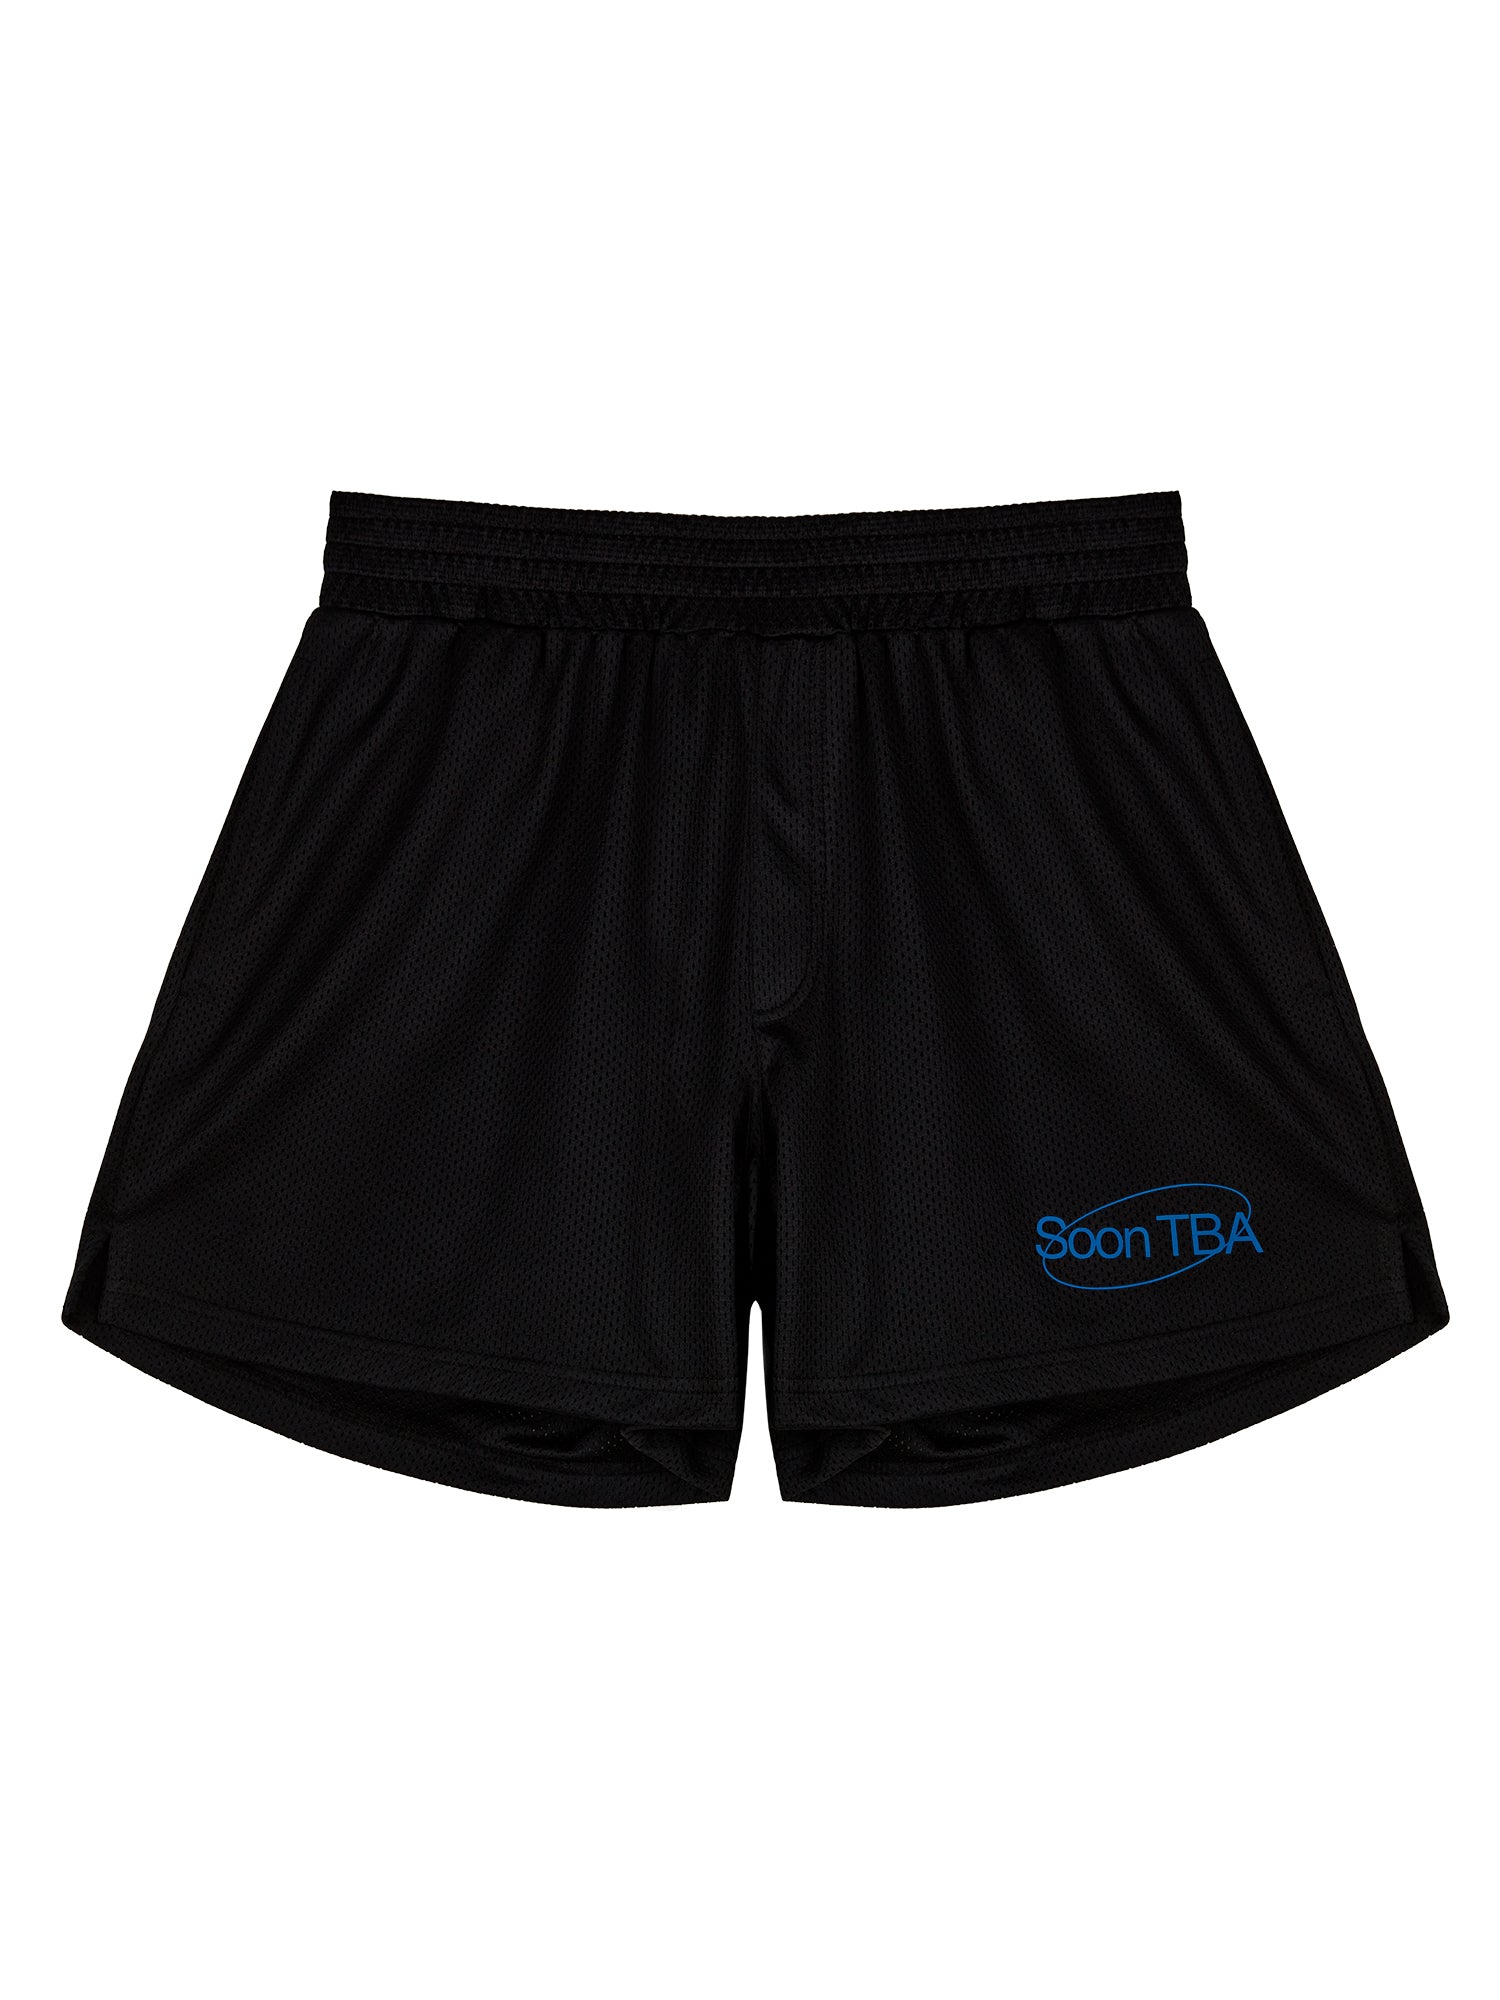 Soon TBA Basketball Shorts